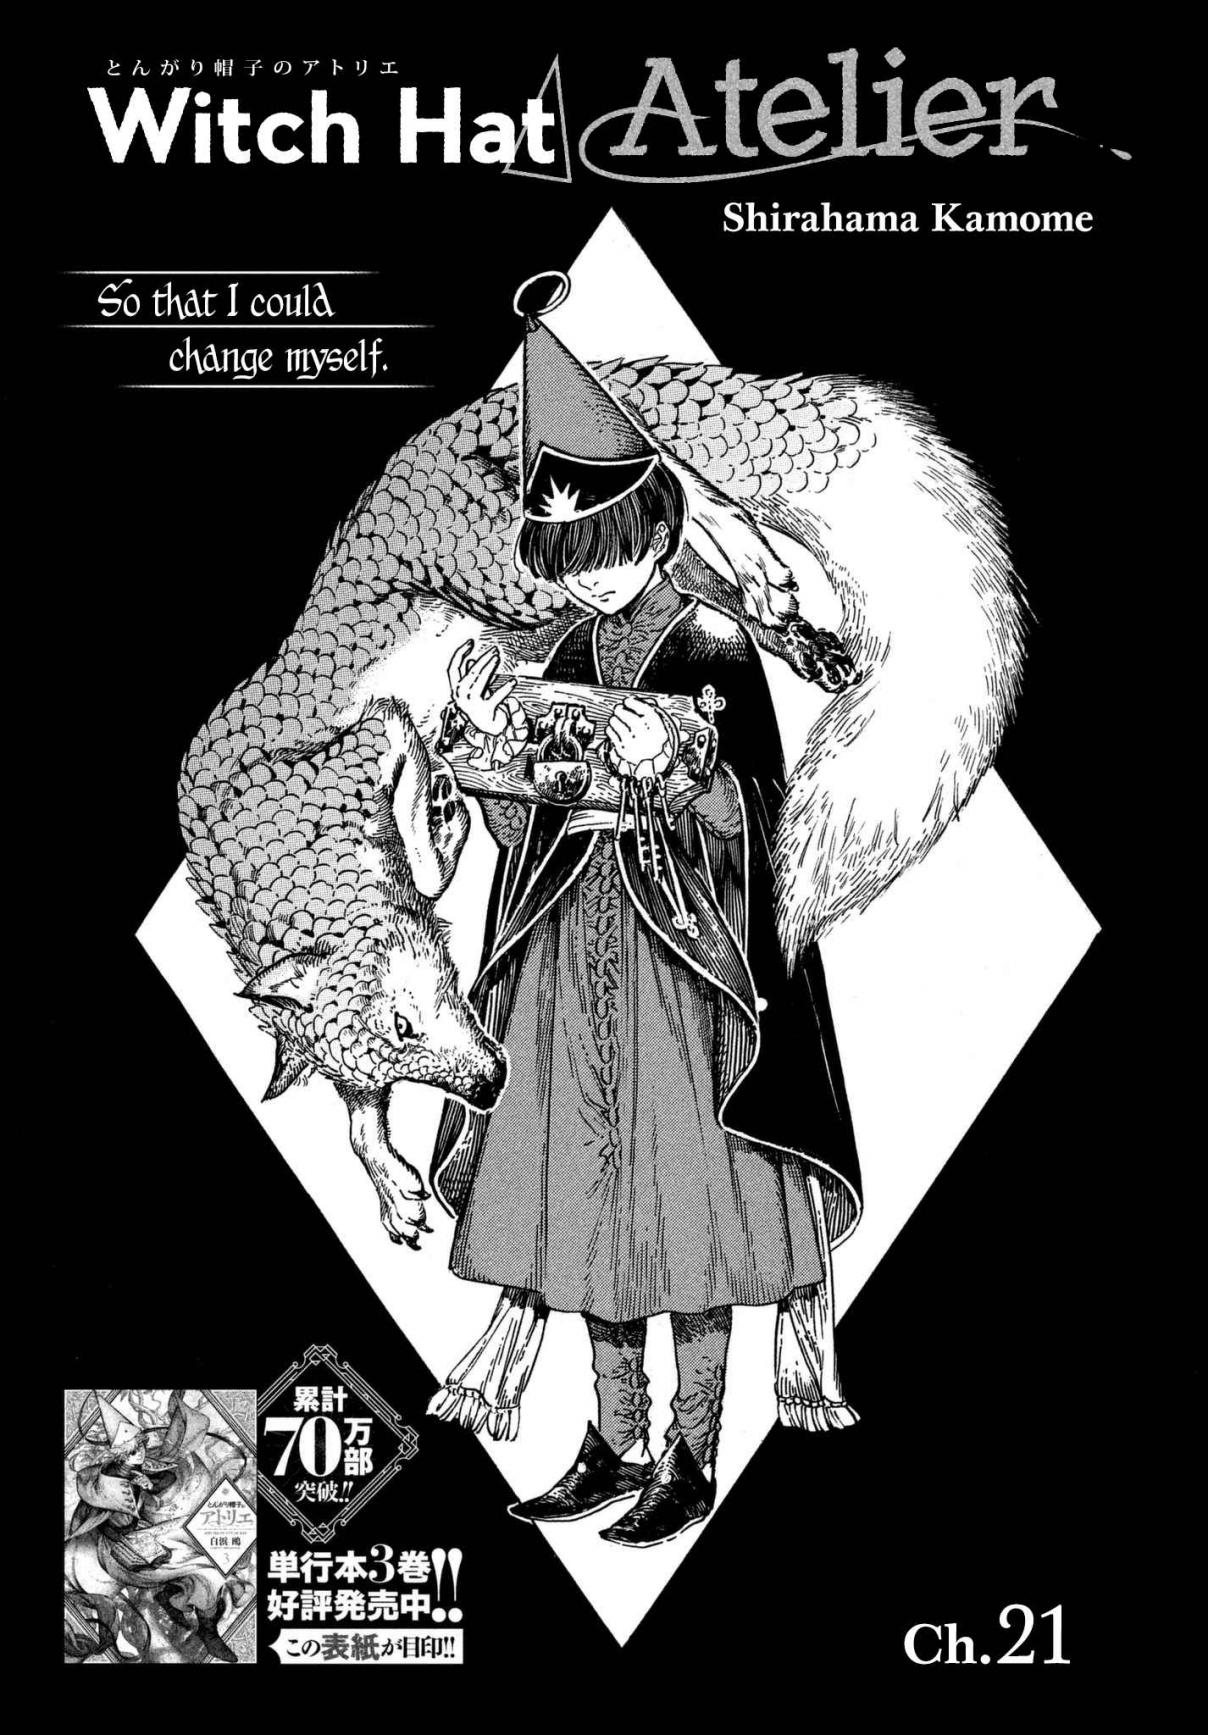 Witch Hat Atelier Vol. 4 Ch. 21